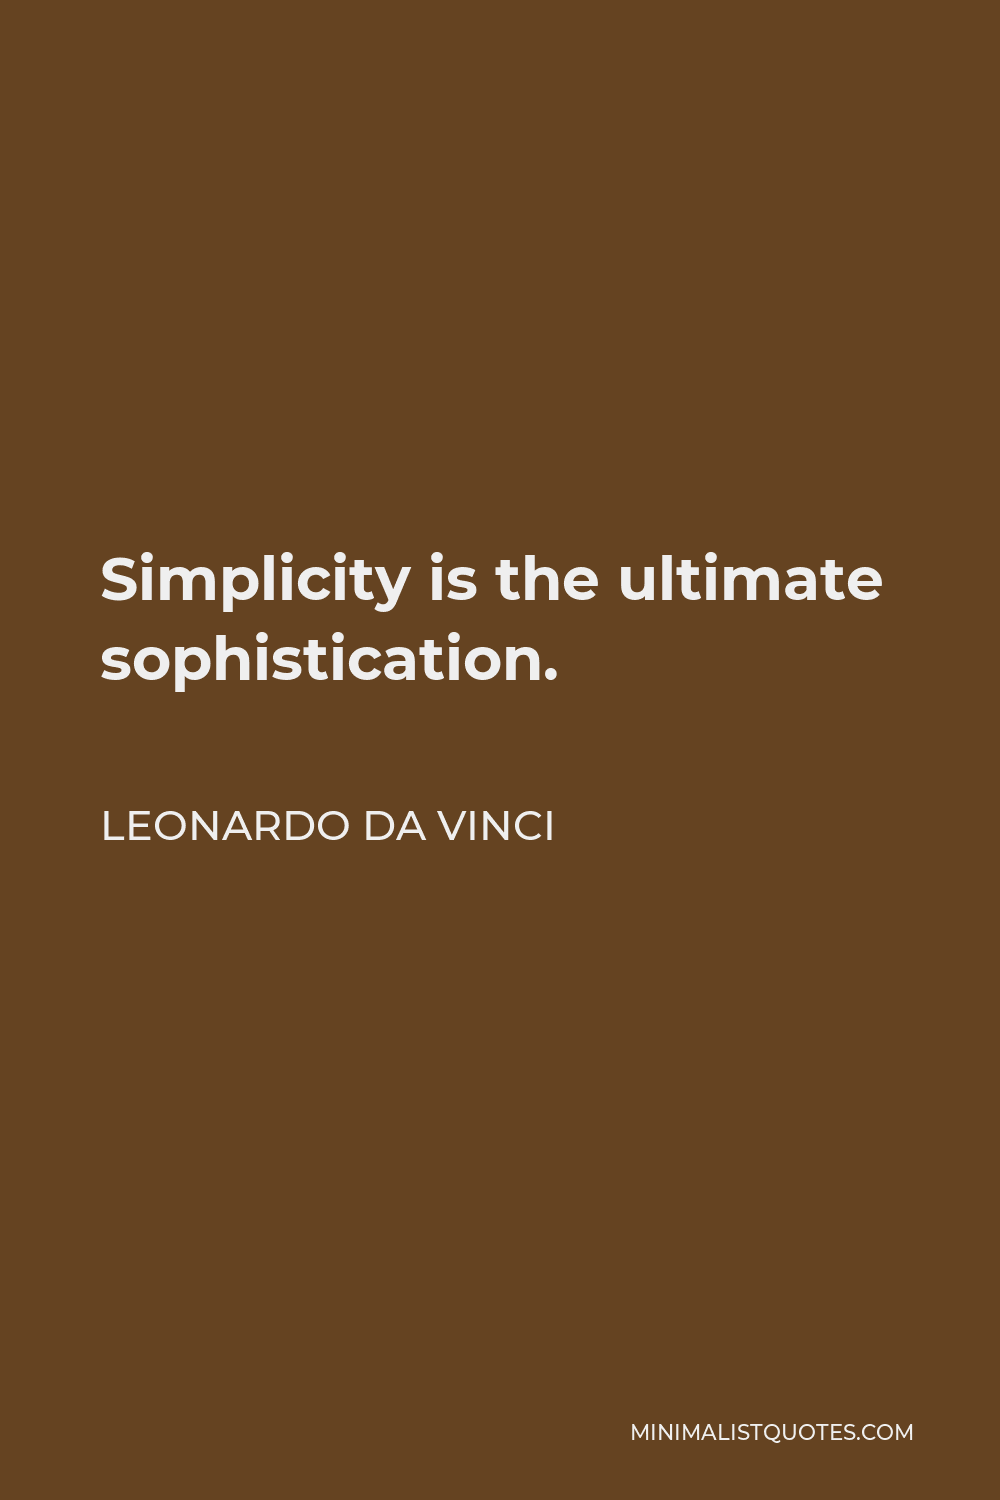 Leonardo da Vinci Quote - Simplicity is the ultimate sophistication.